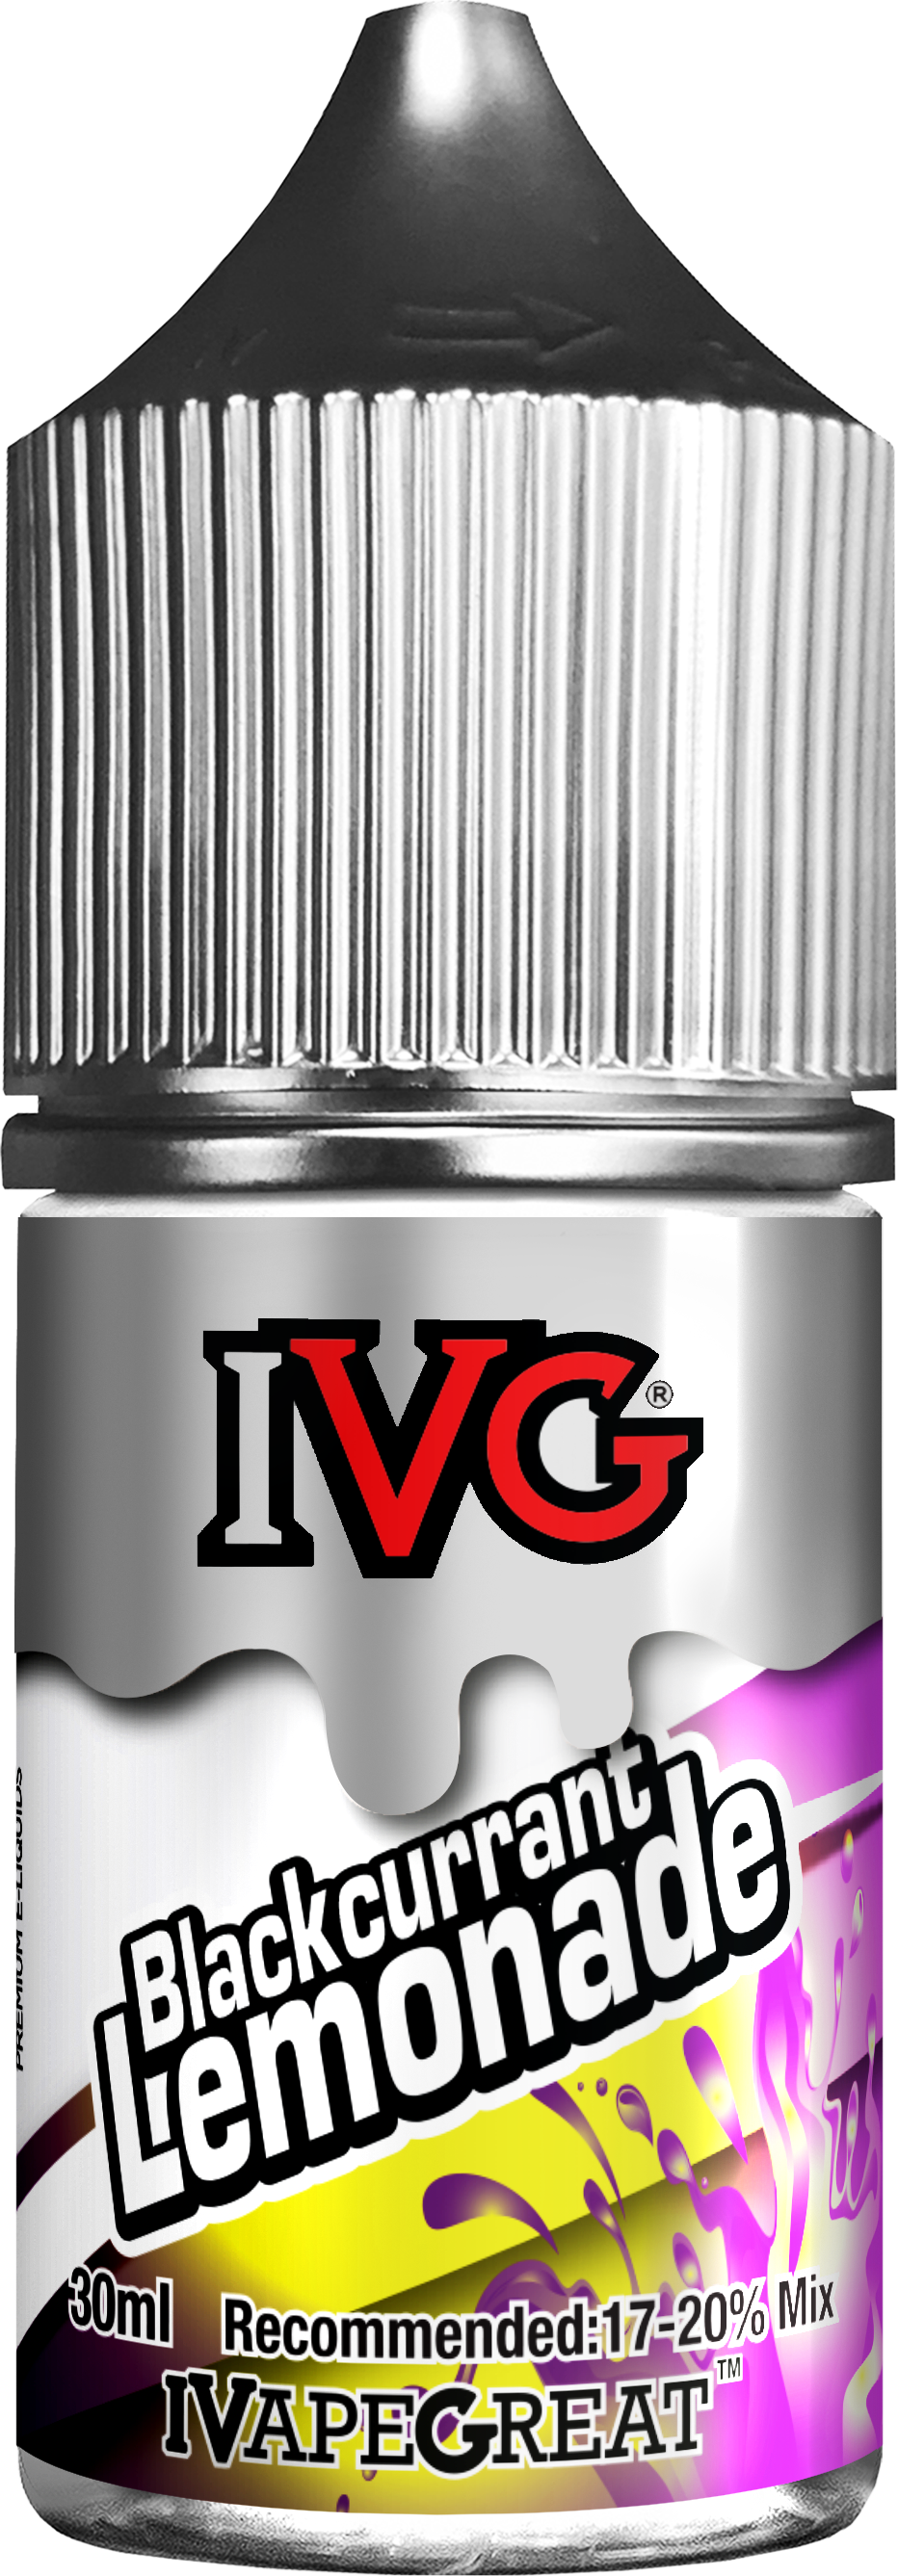 Blackcurrant Lemonade Flavour Concentrate by IVG